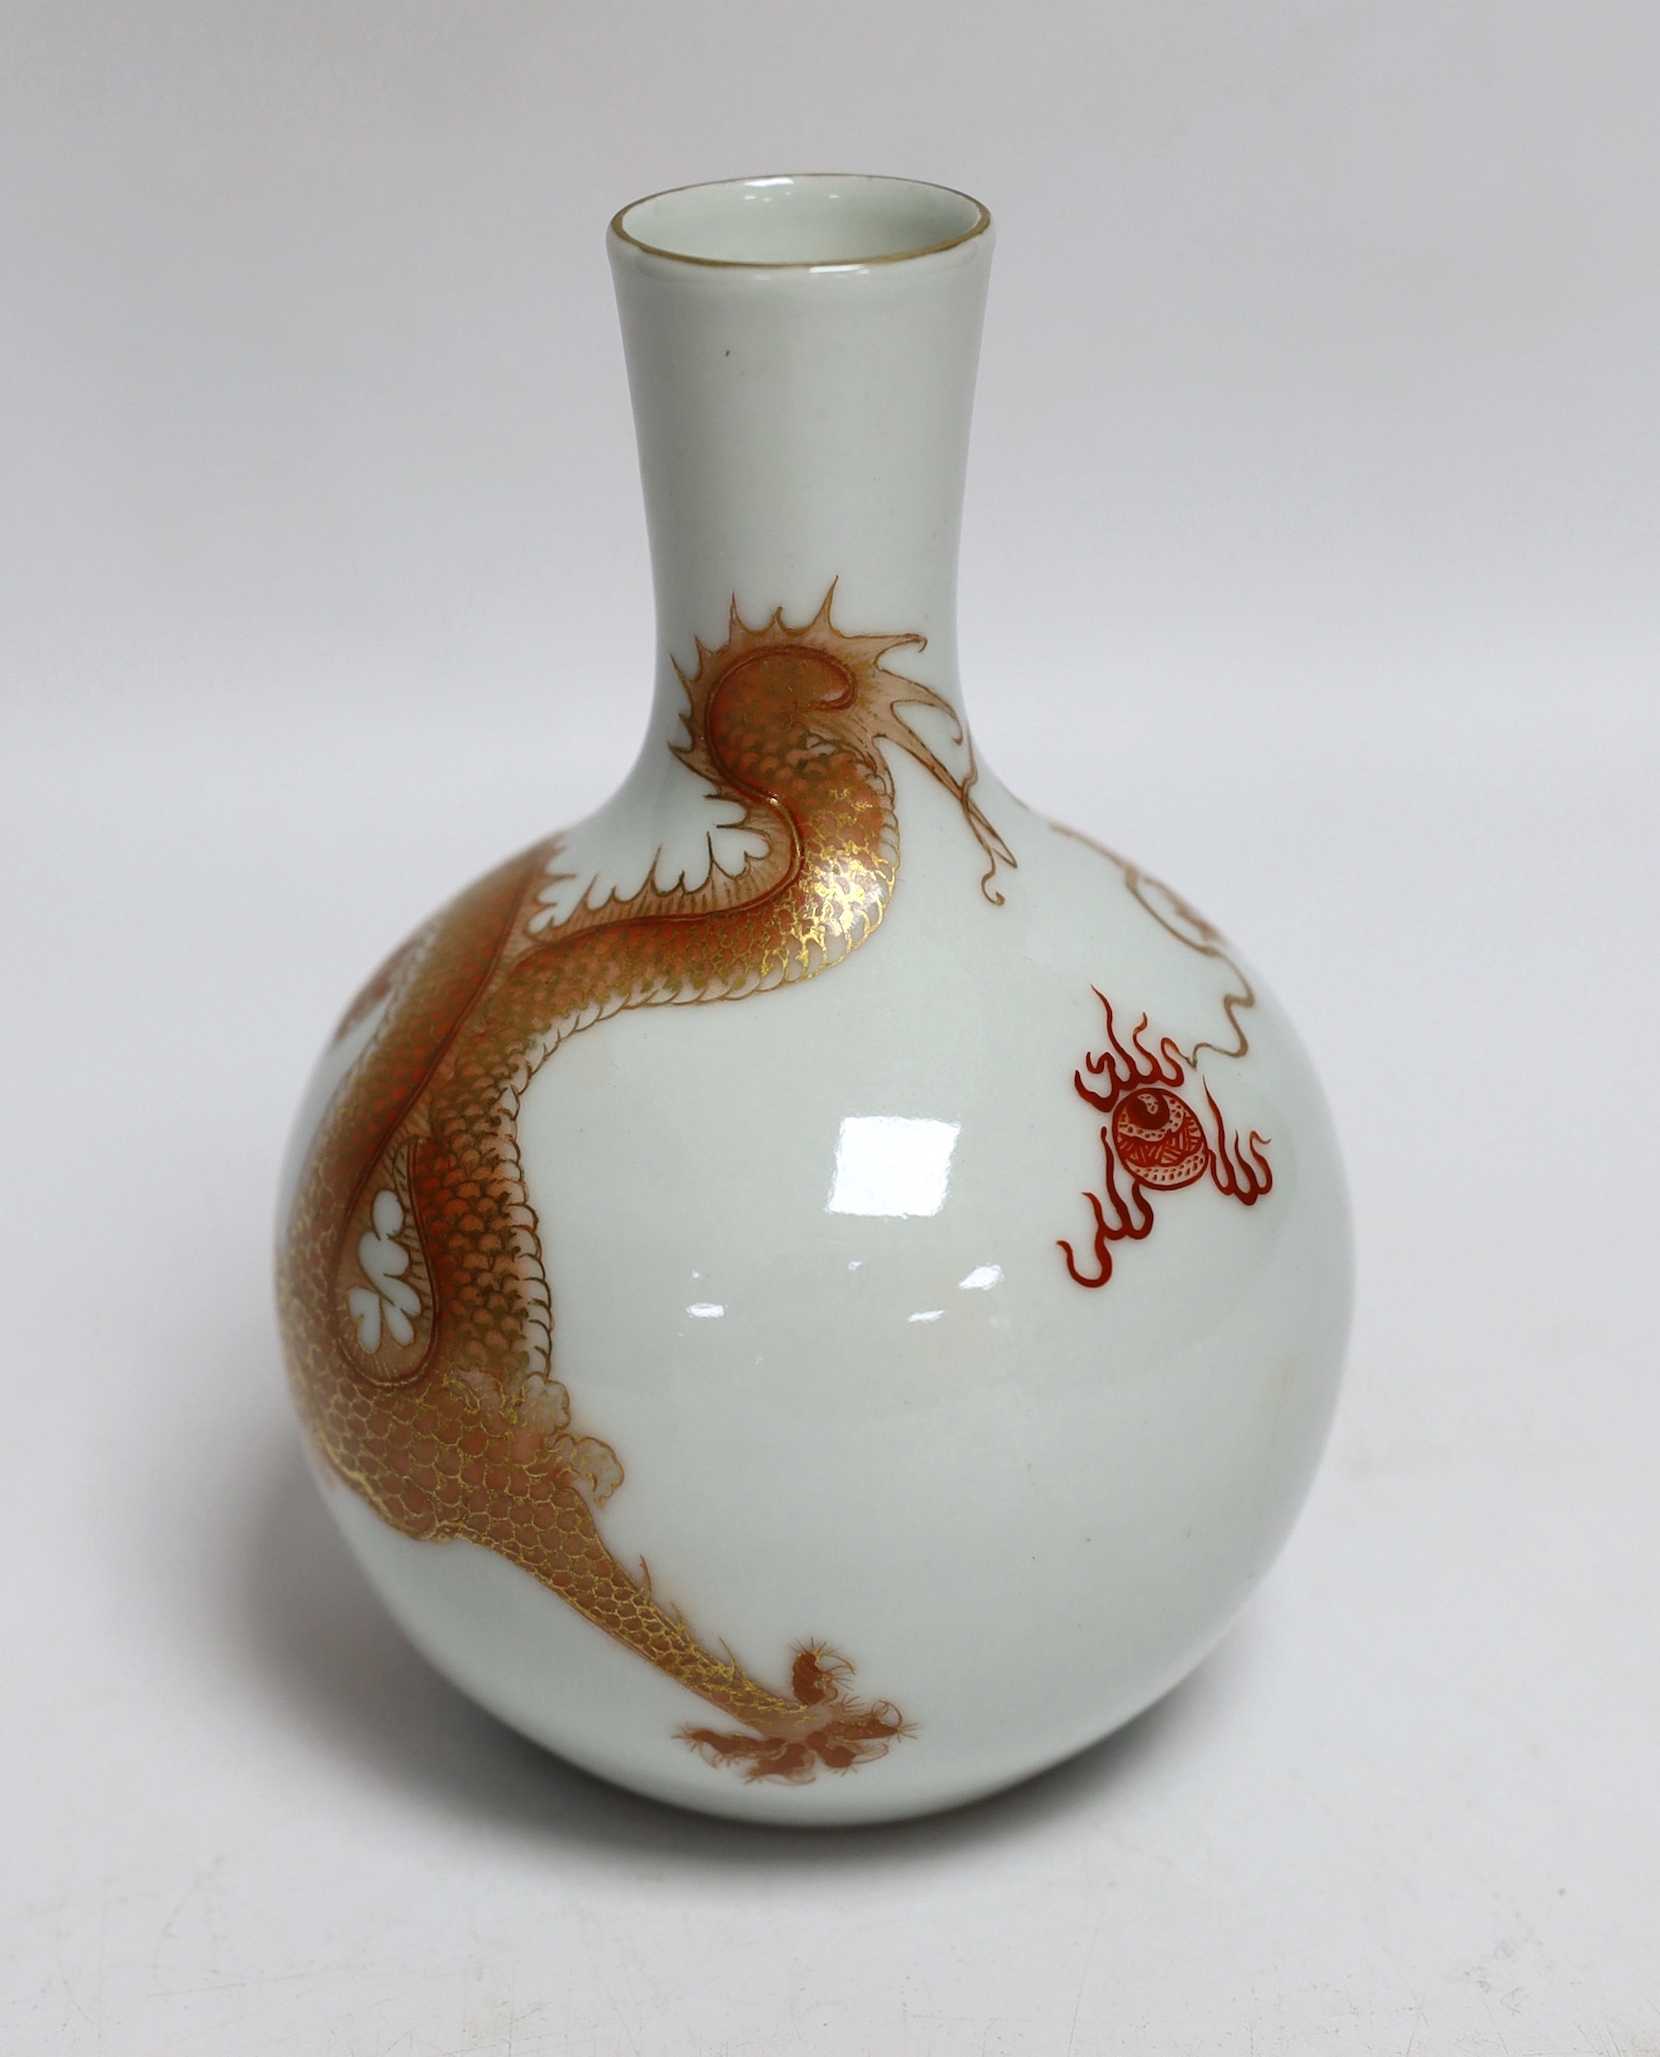 A Chinese rouge de fer dragon bottle vase, 14cm high (boxed)